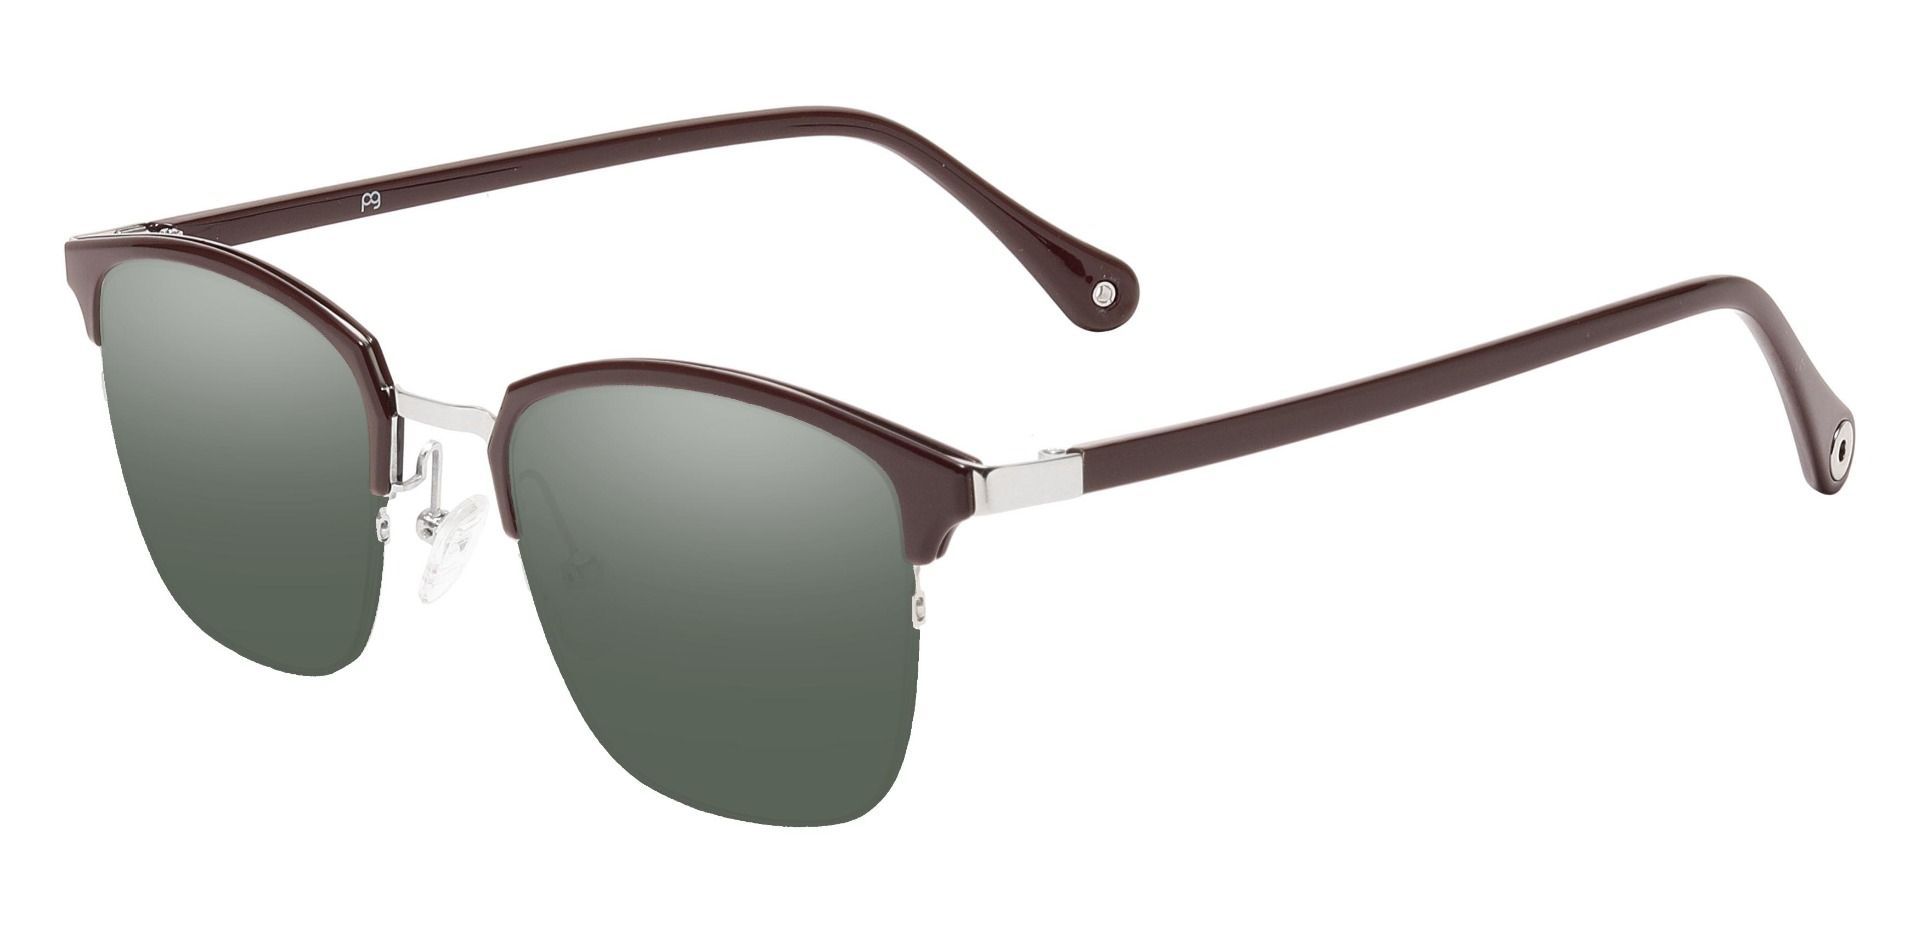 Atlantic Browline Prescription Sunglasses - Brown Frame With Green Lenses